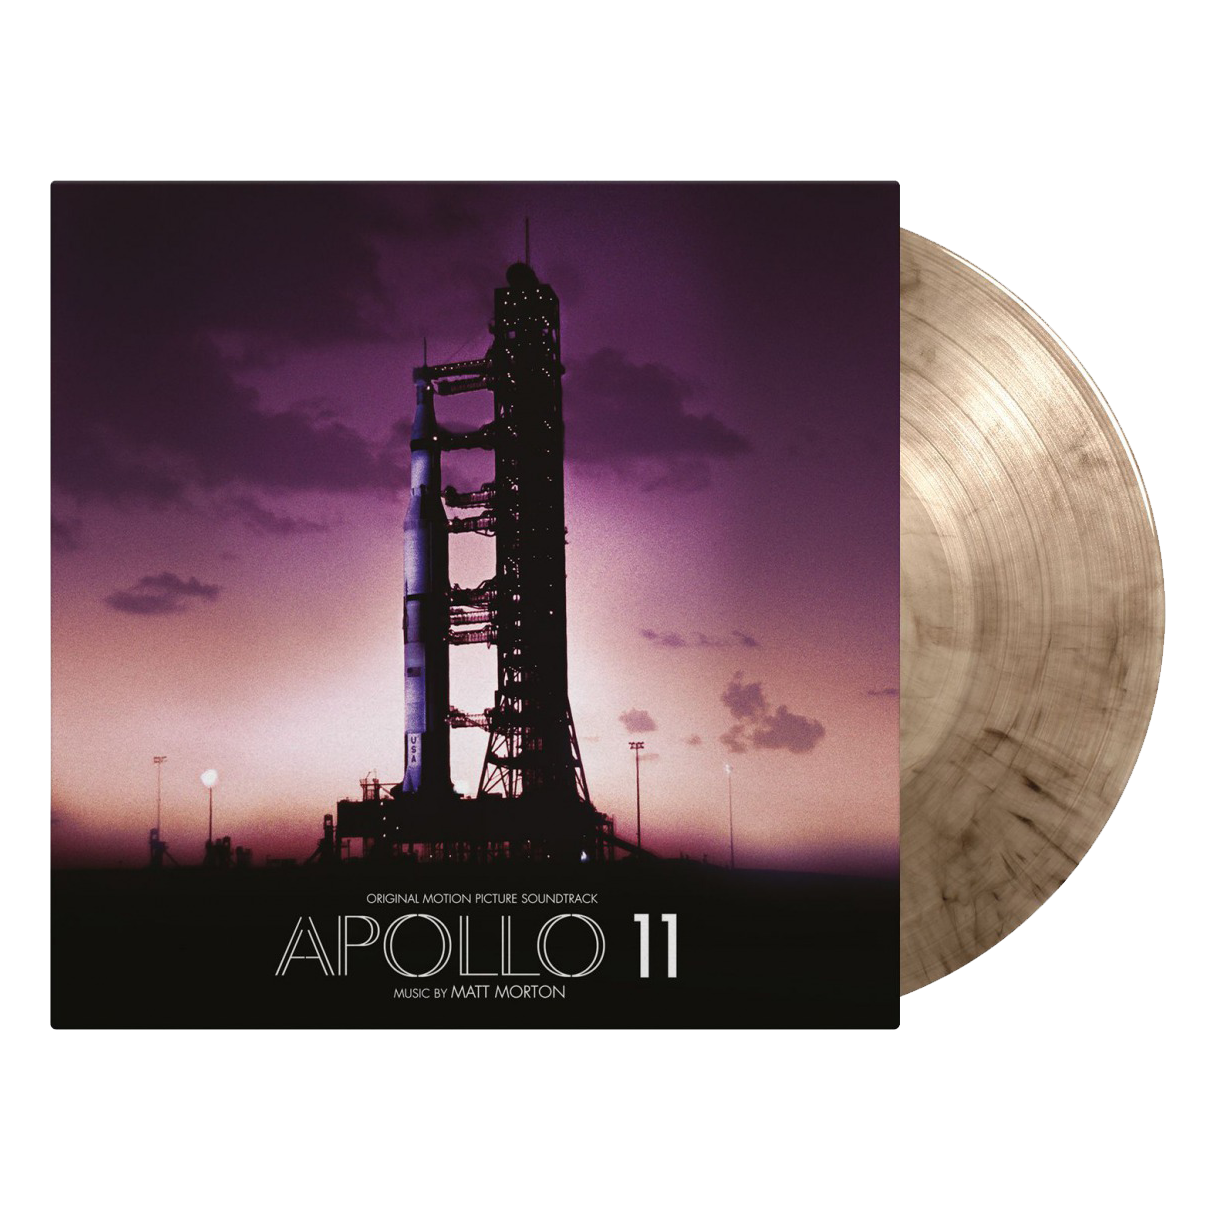 Original Soundtrack, Matt Morton - Apollo 11 (OST): Limited Moondust Colour Vinyl LP